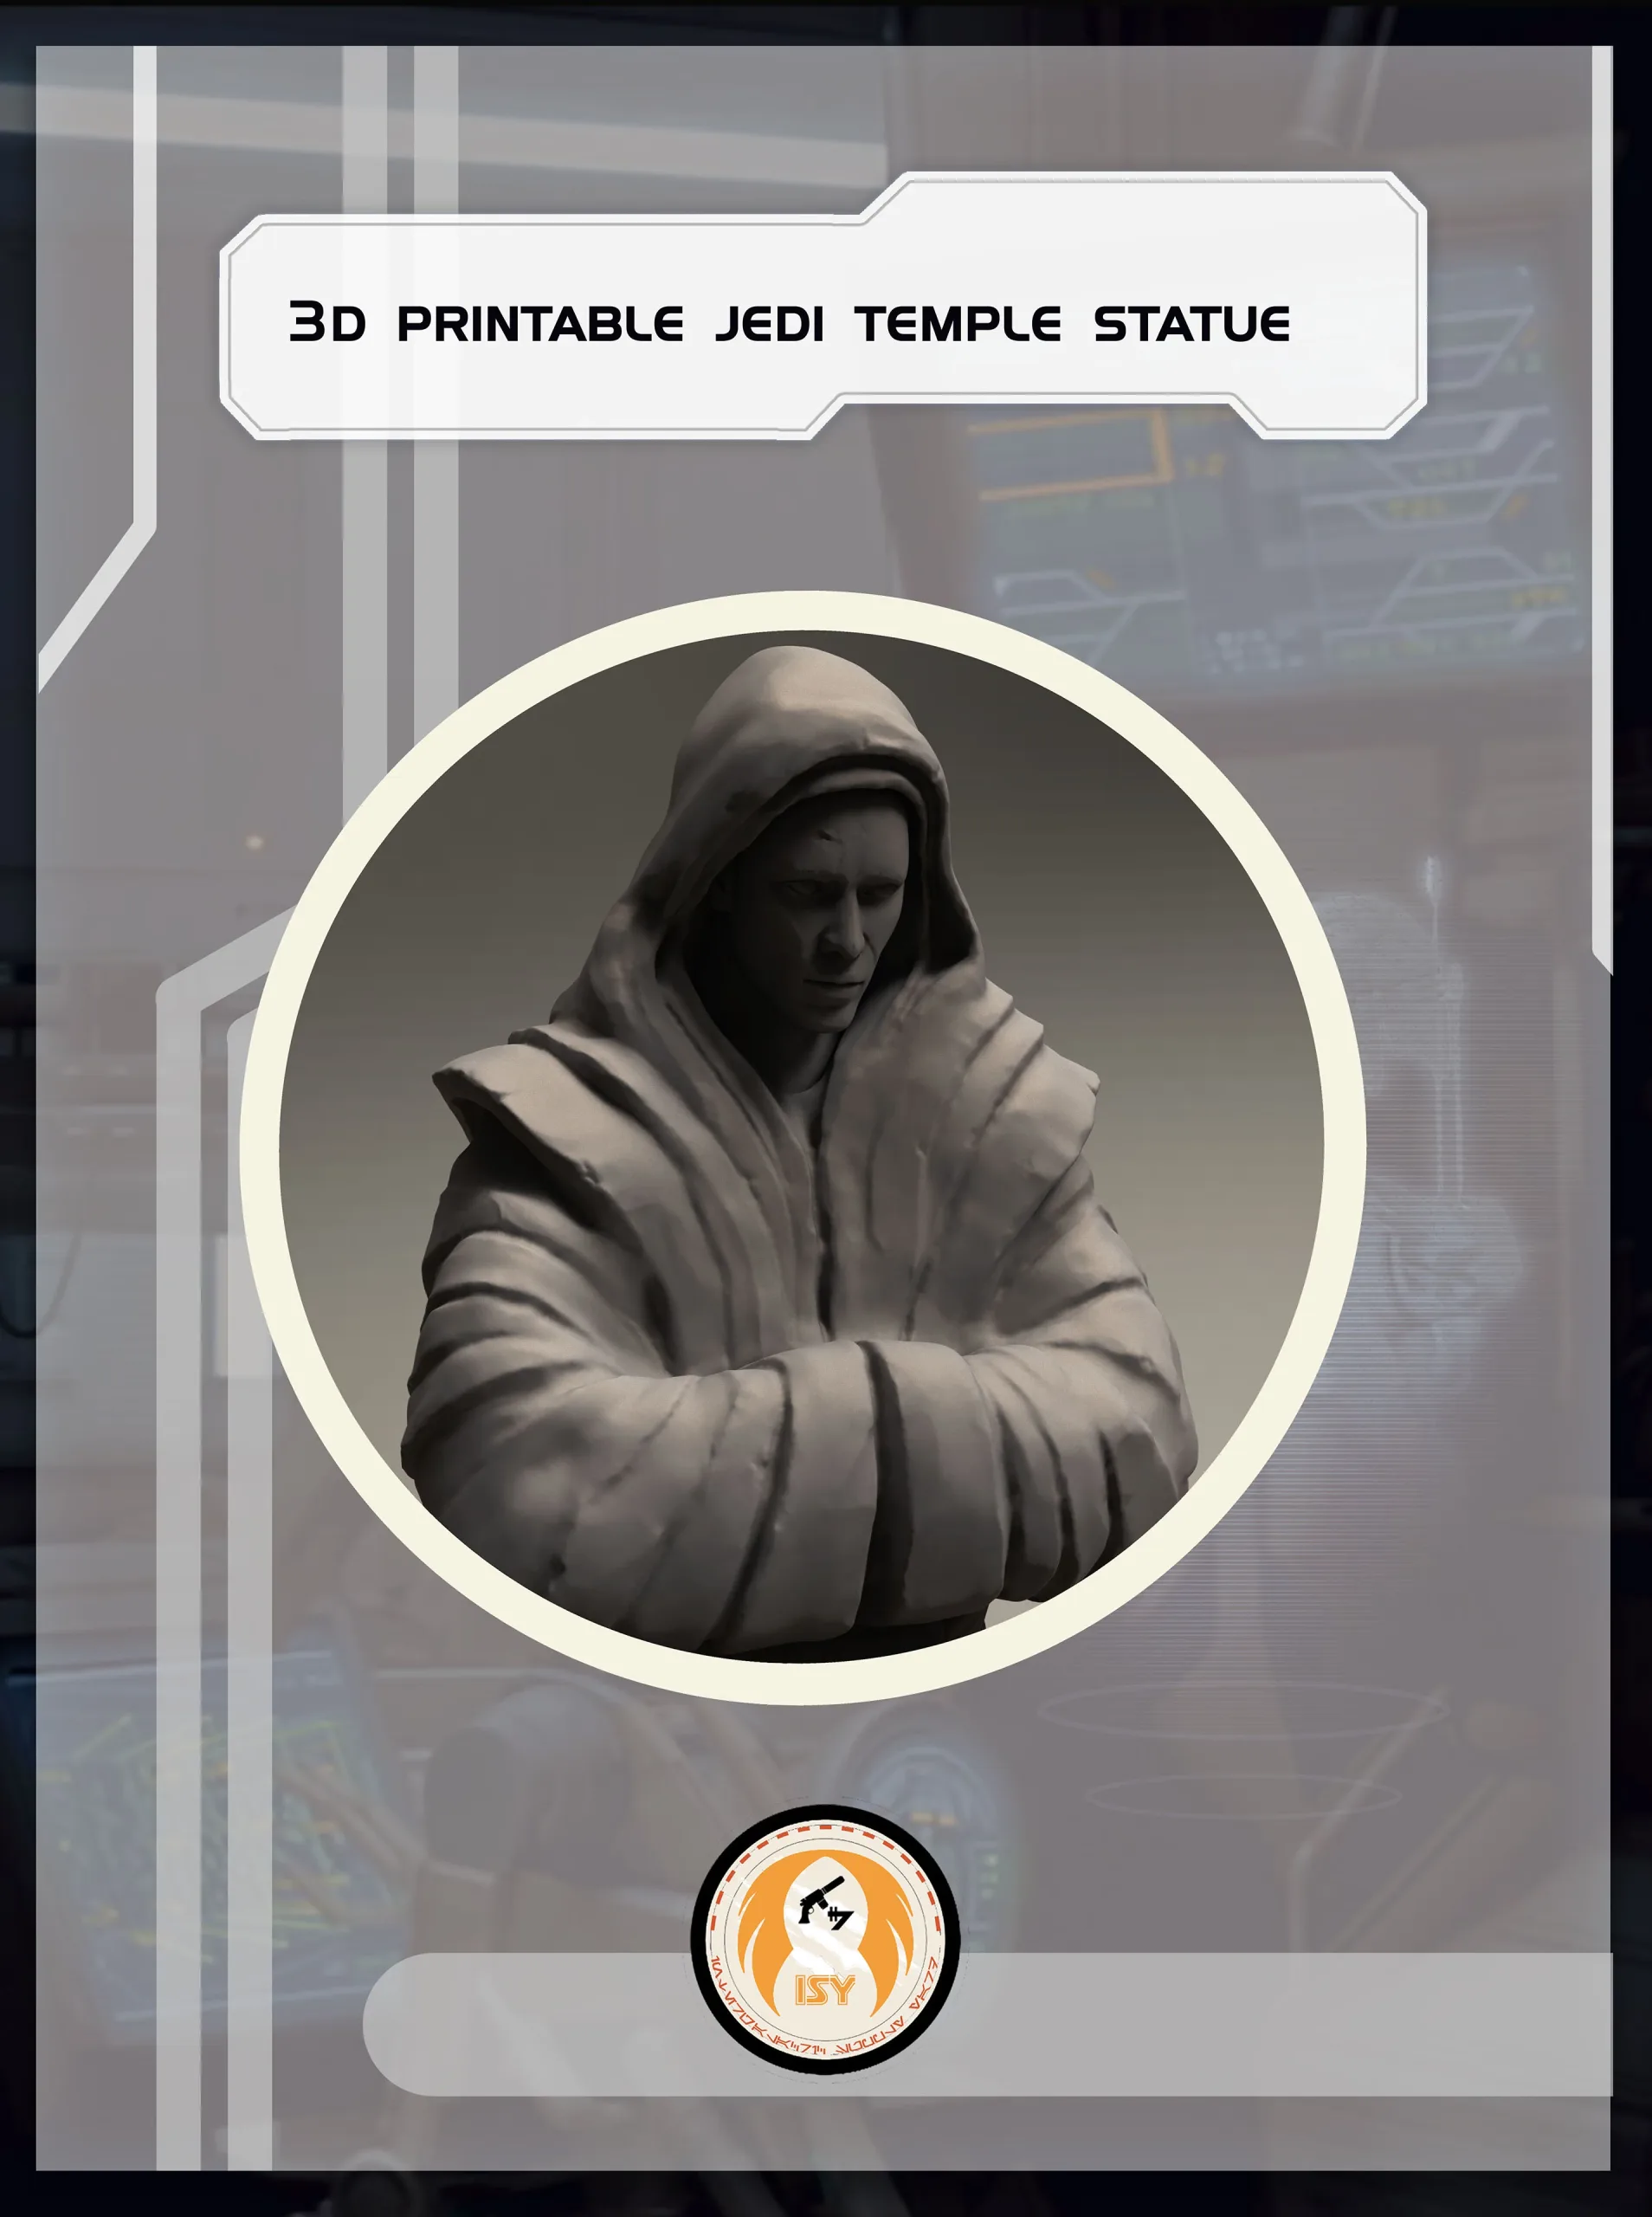 Star wars 3d printable jedi temple statue figurine